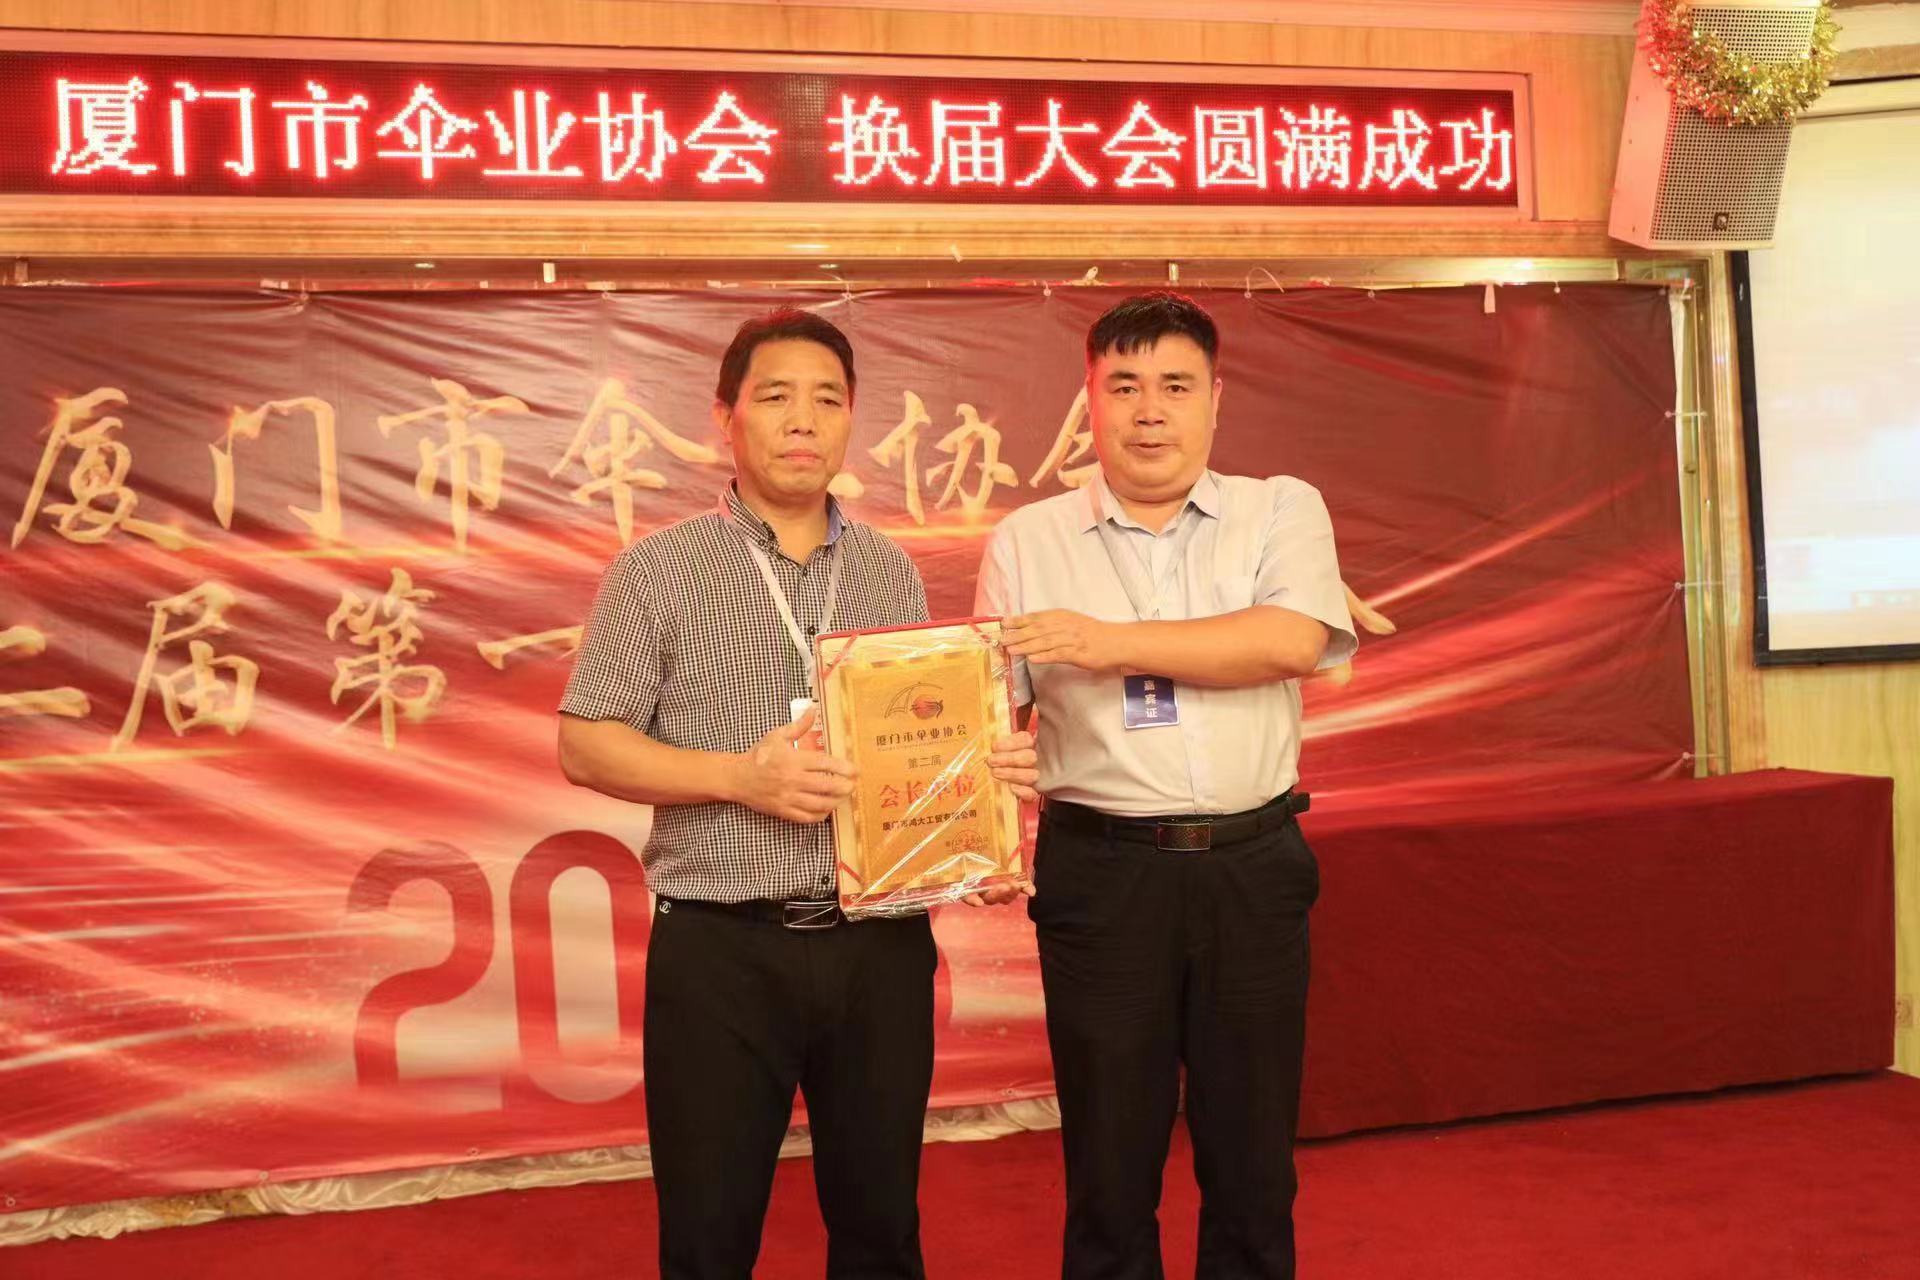 Izabran je novi Upravni odbor krovne udruge Xiamen.